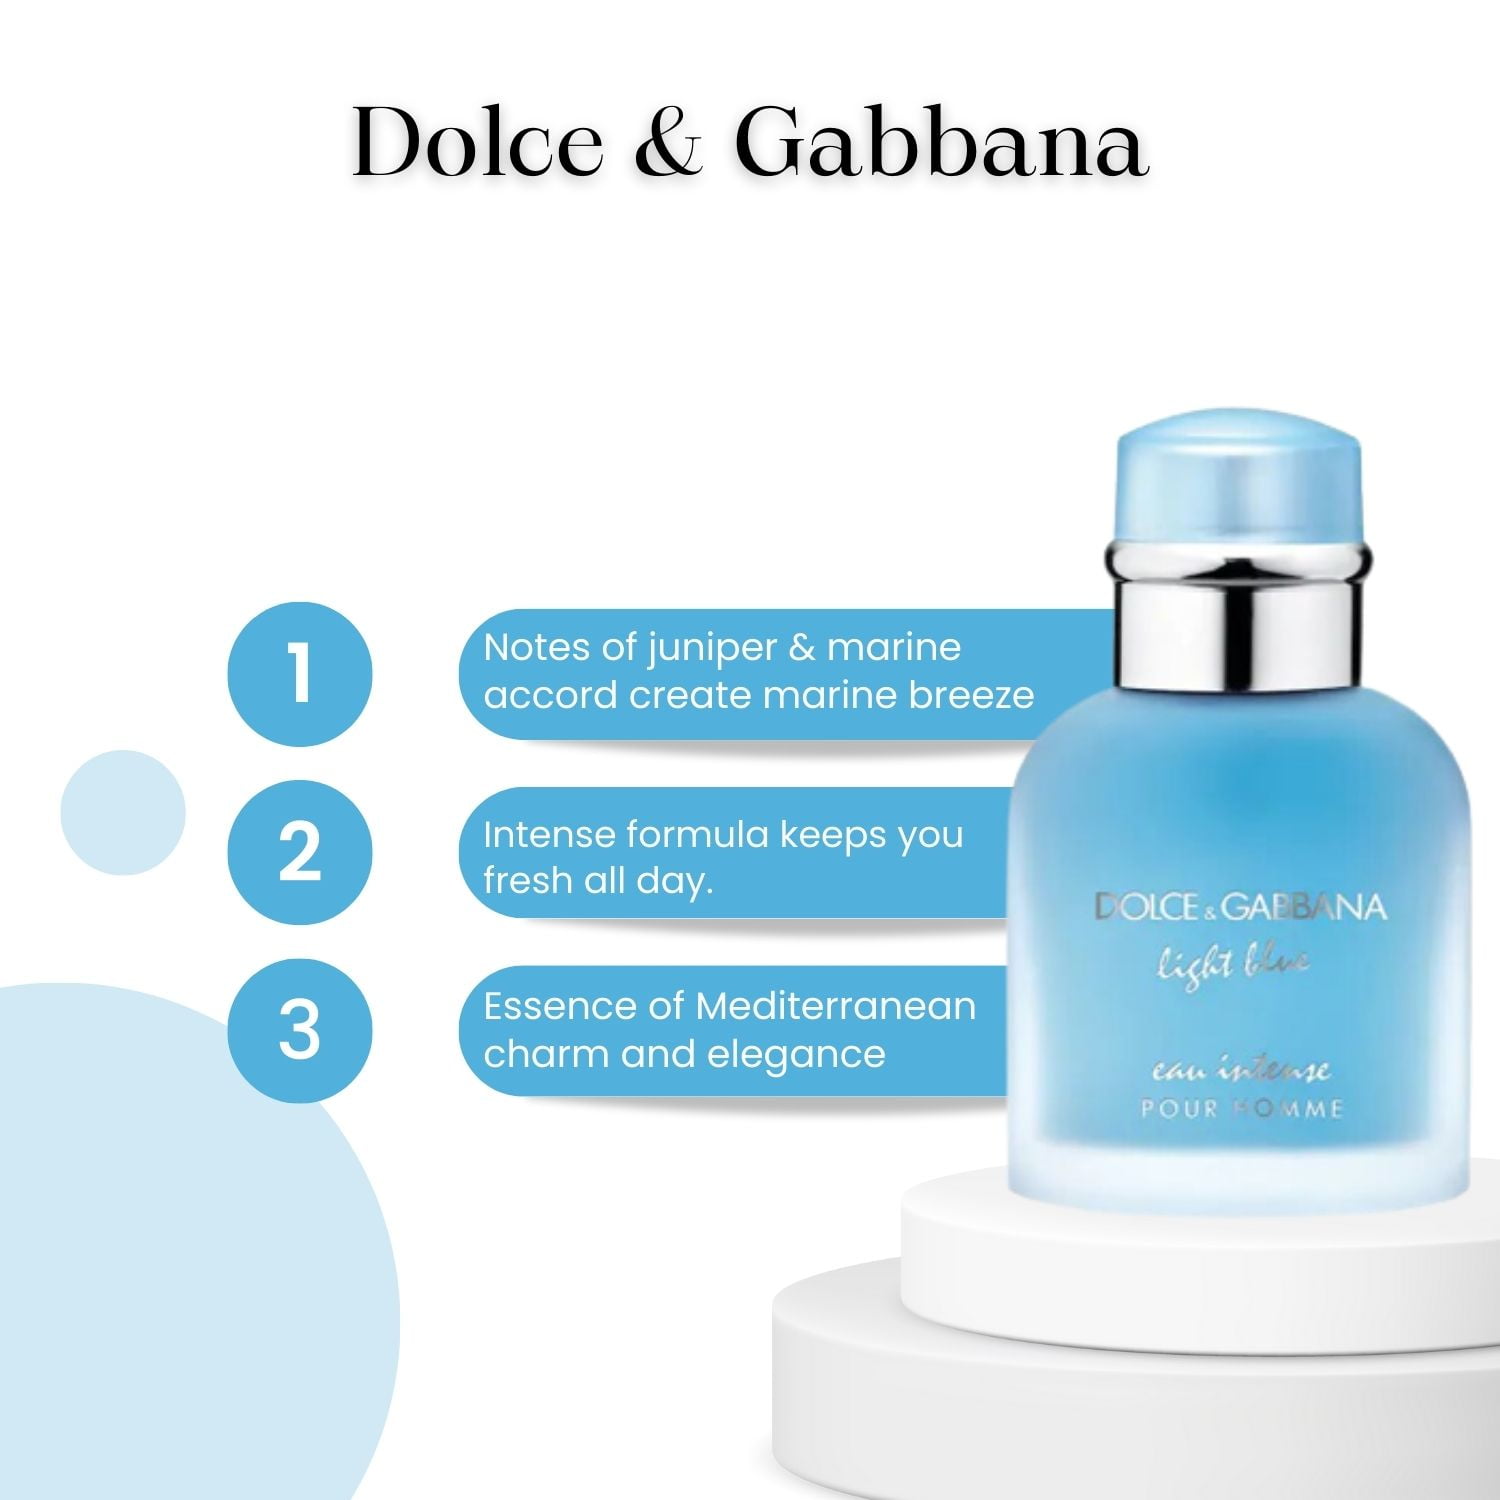 Dolce & Gabbana Light Blue Eau De Toilette Fragrance for Men - 6.7 fl oz bottle